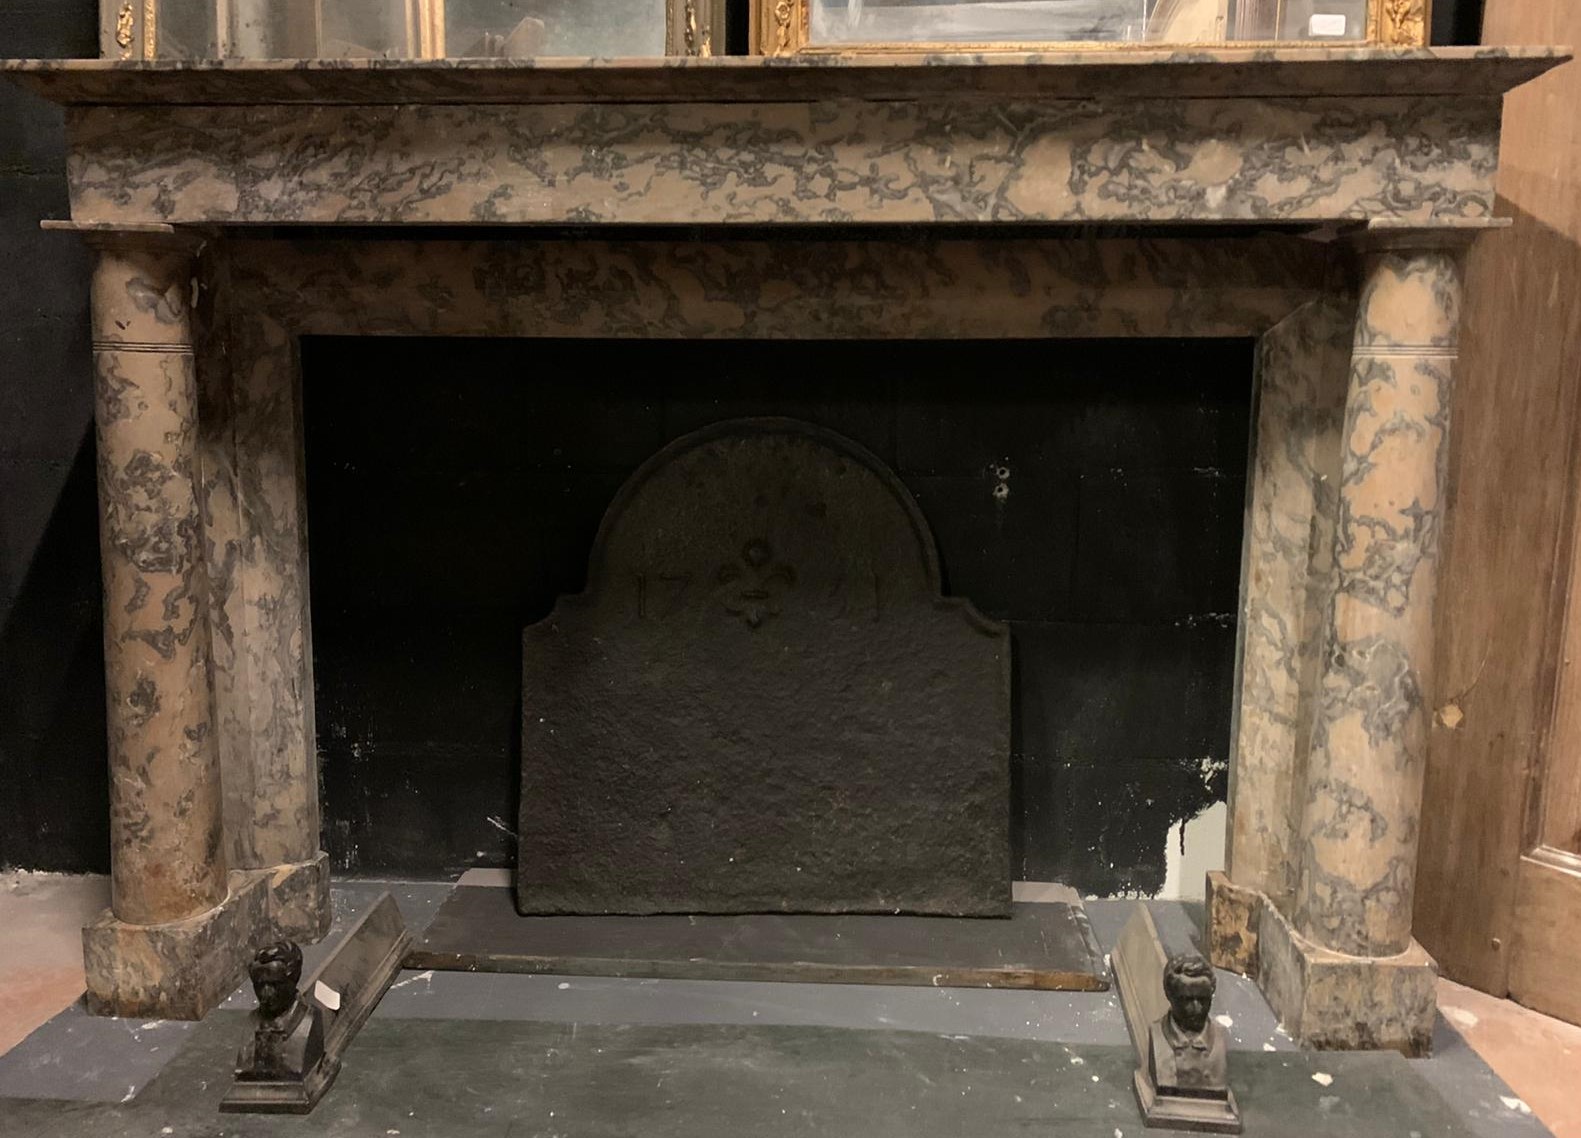 chm739 - Empire fireplace, mid 19th century, cm w 152 x h 102 x d 40